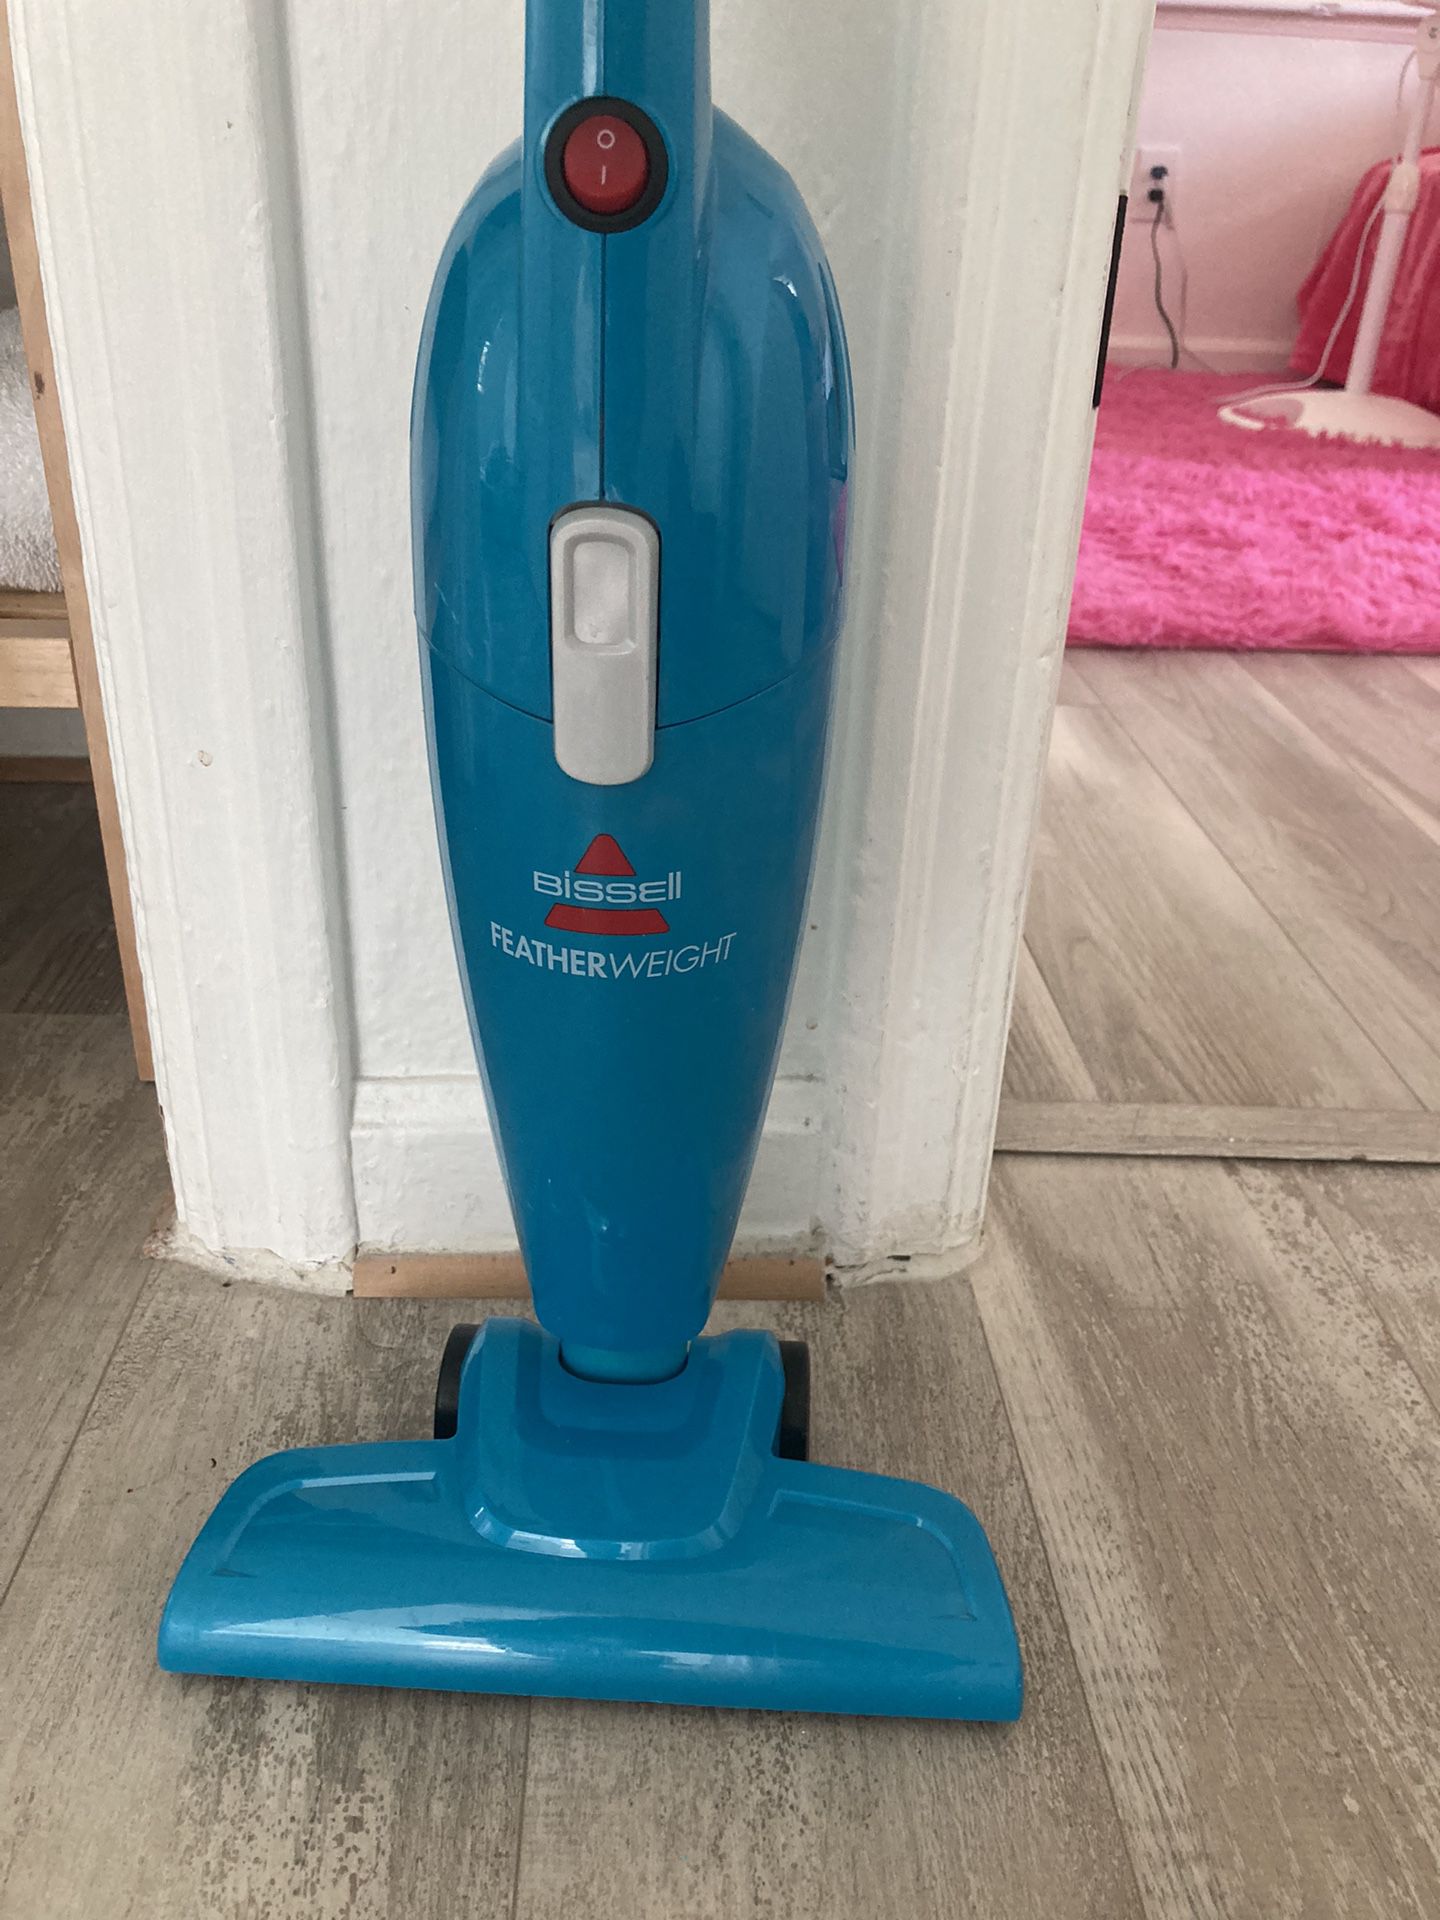 Bissell Featherlight Vacuum